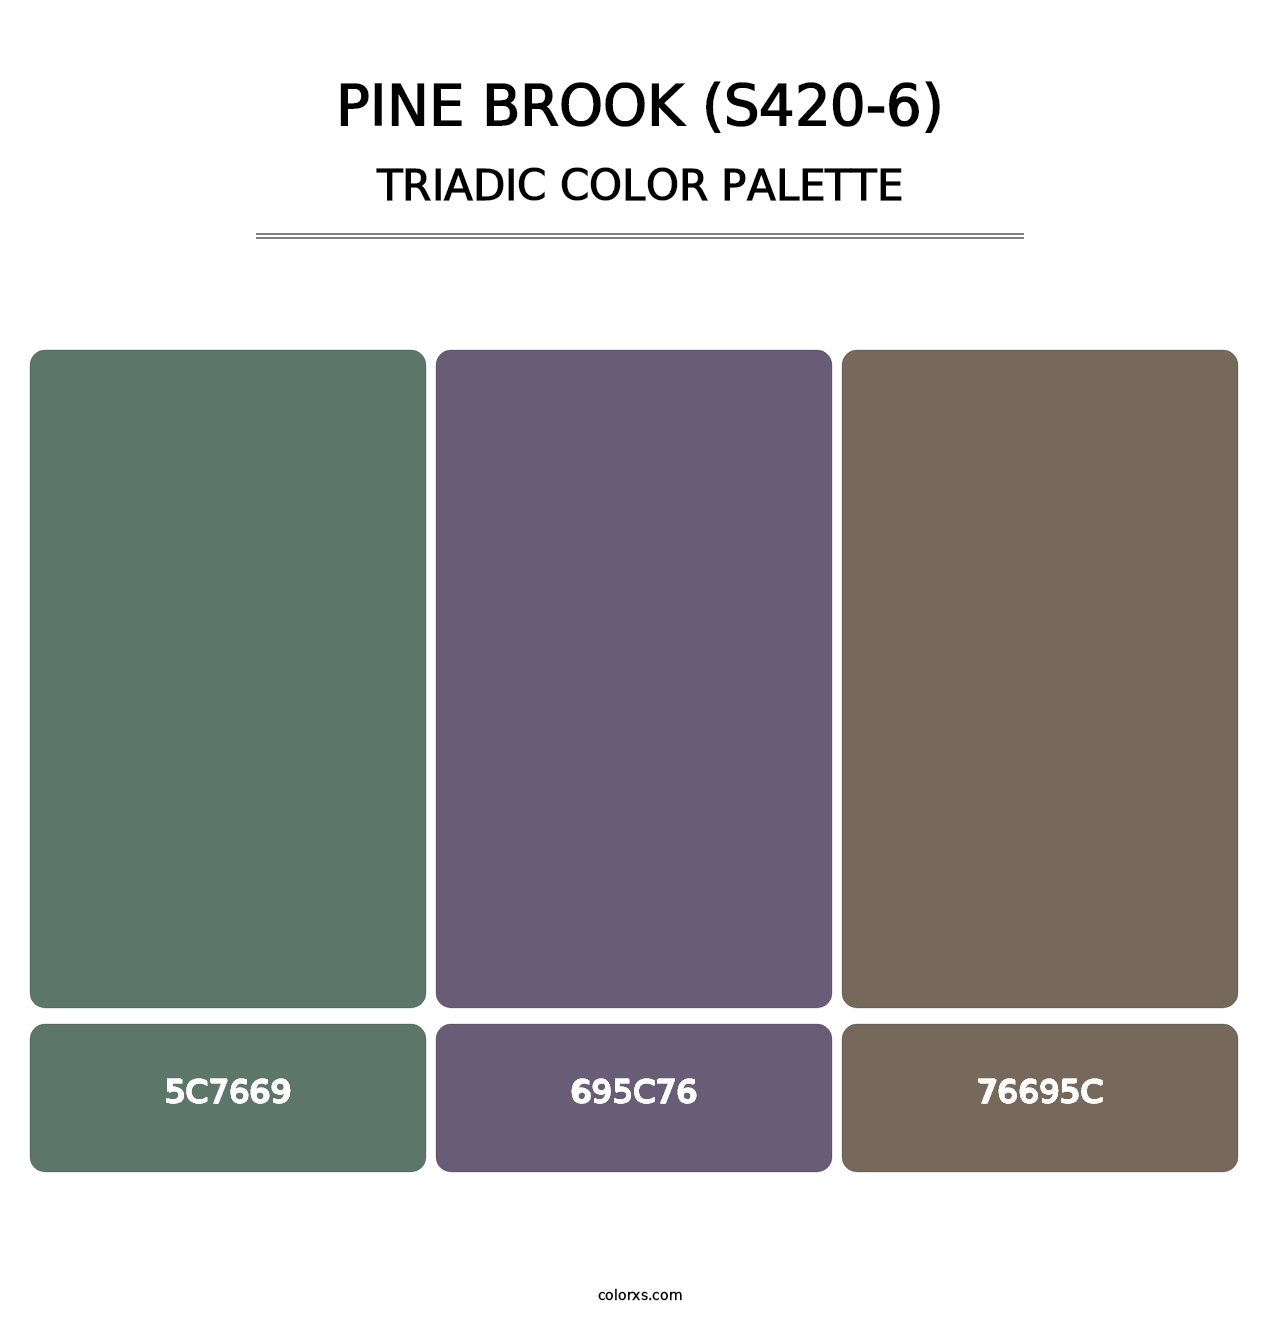 Pine Brook (S420-6) - Triadic Color Palette